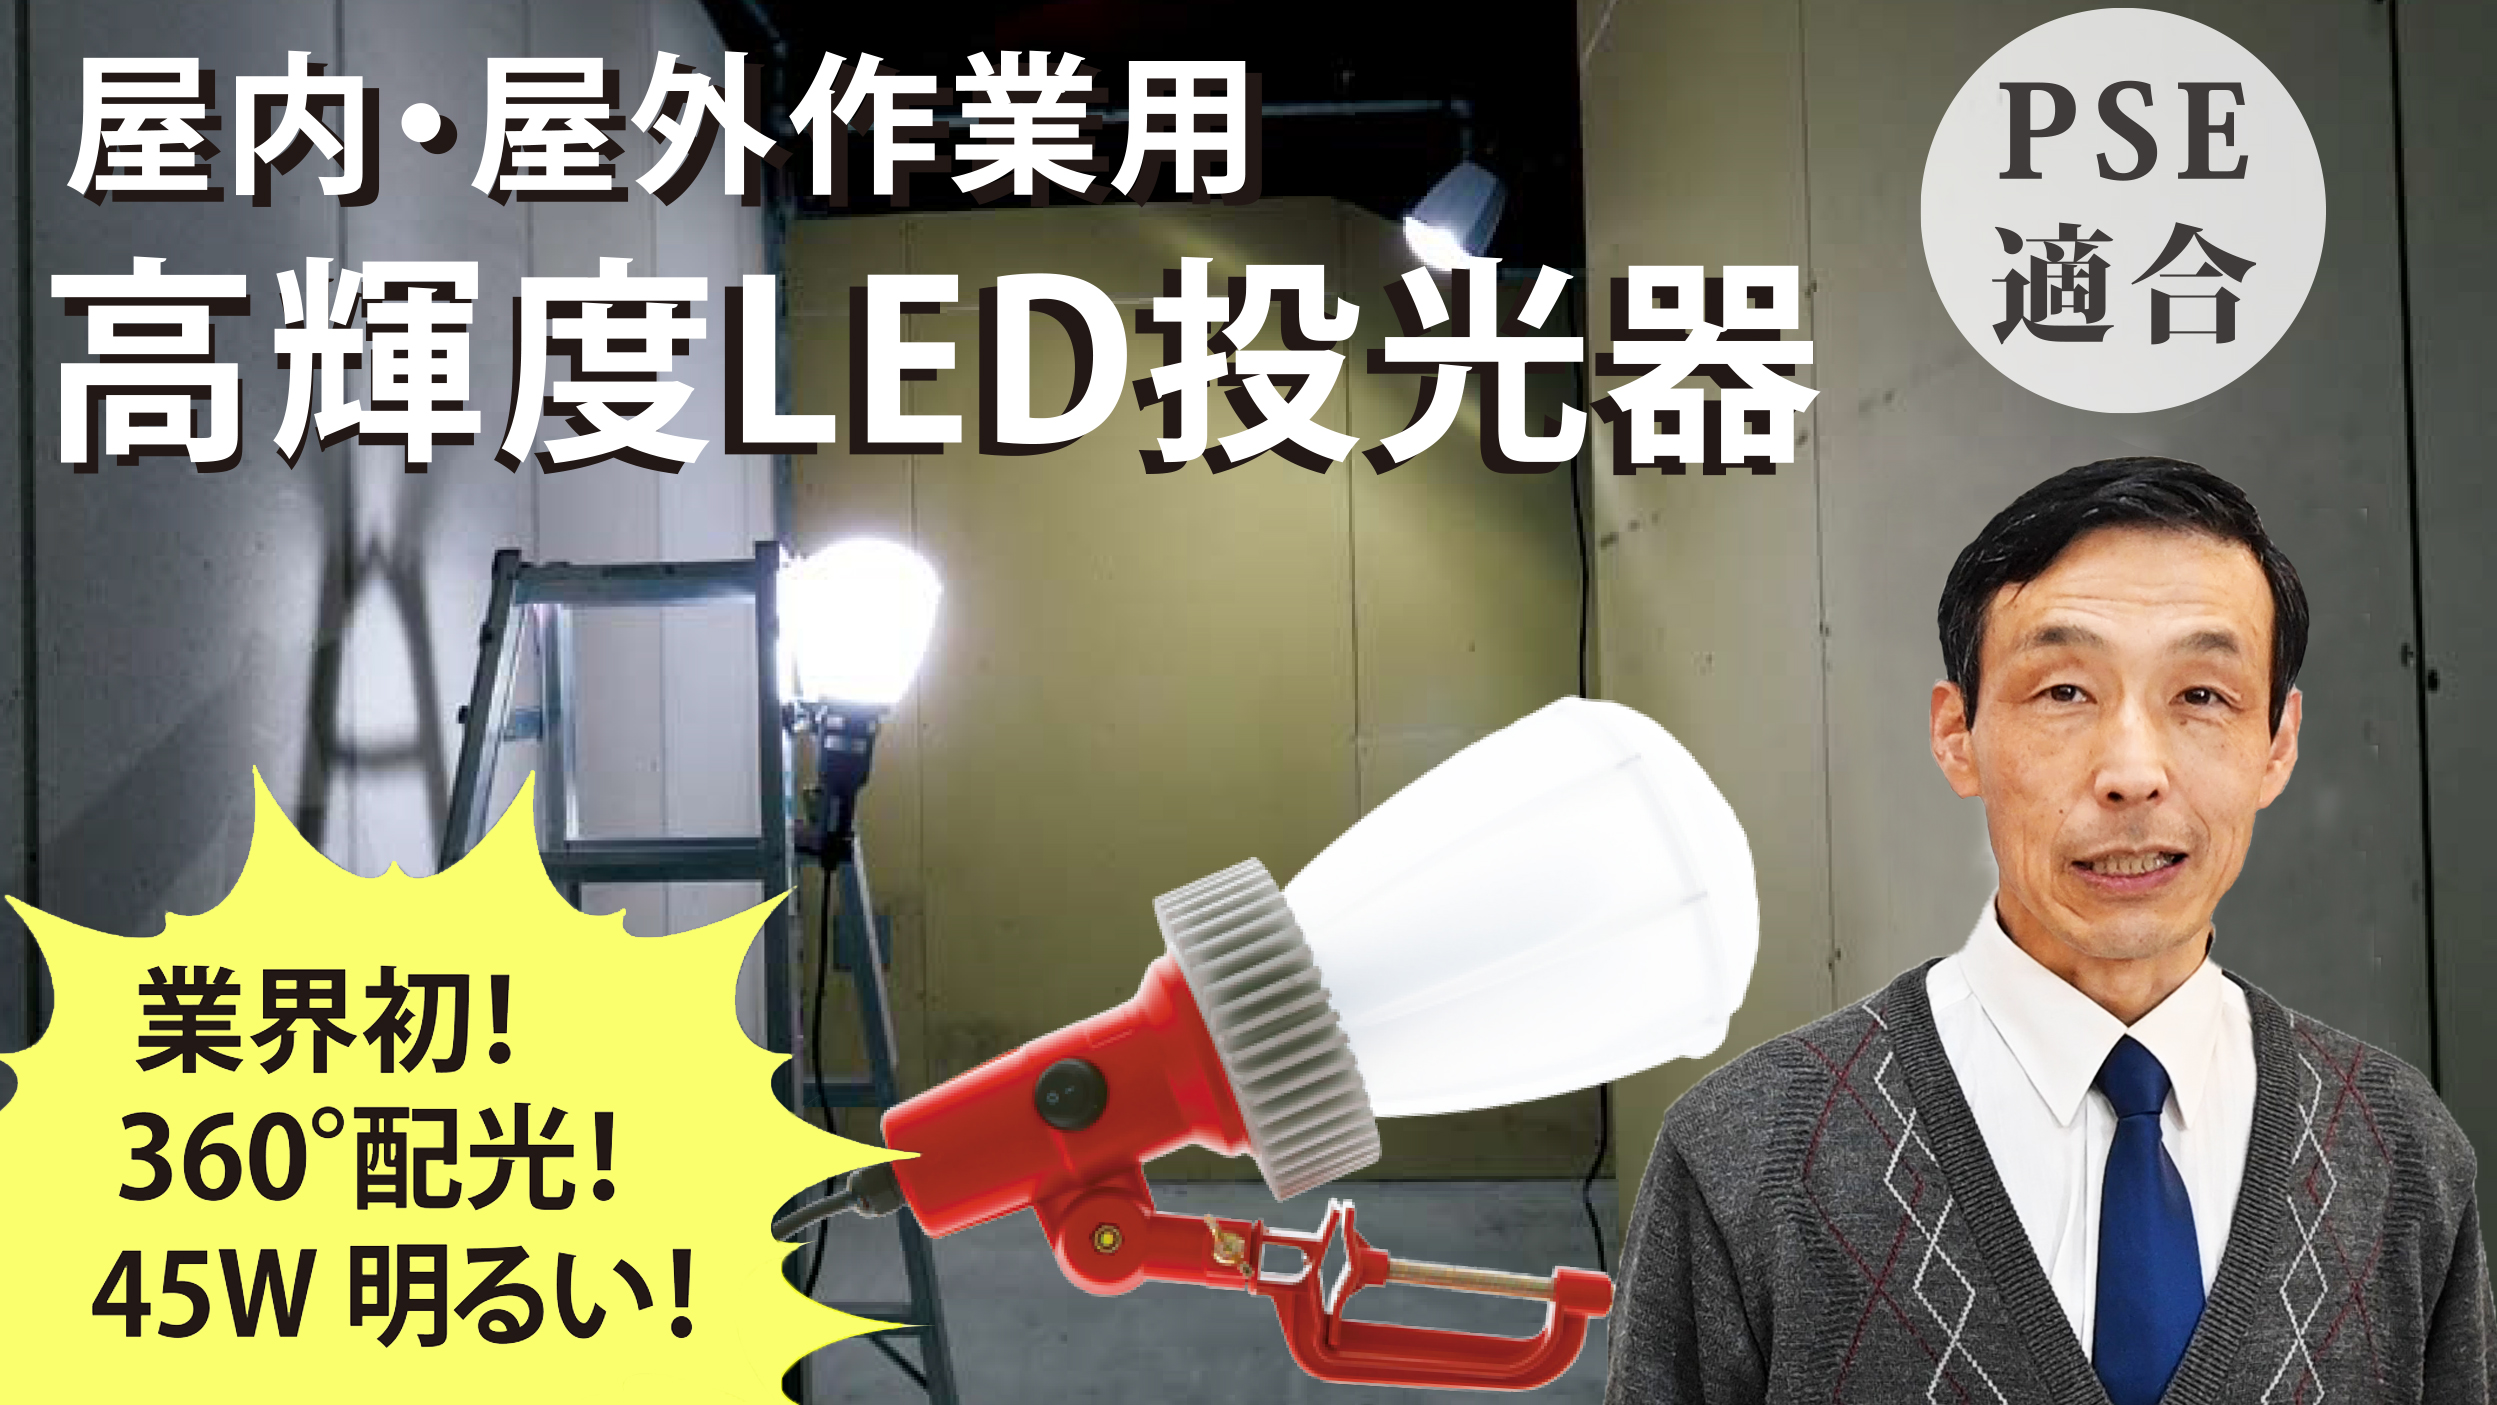 LED投光器